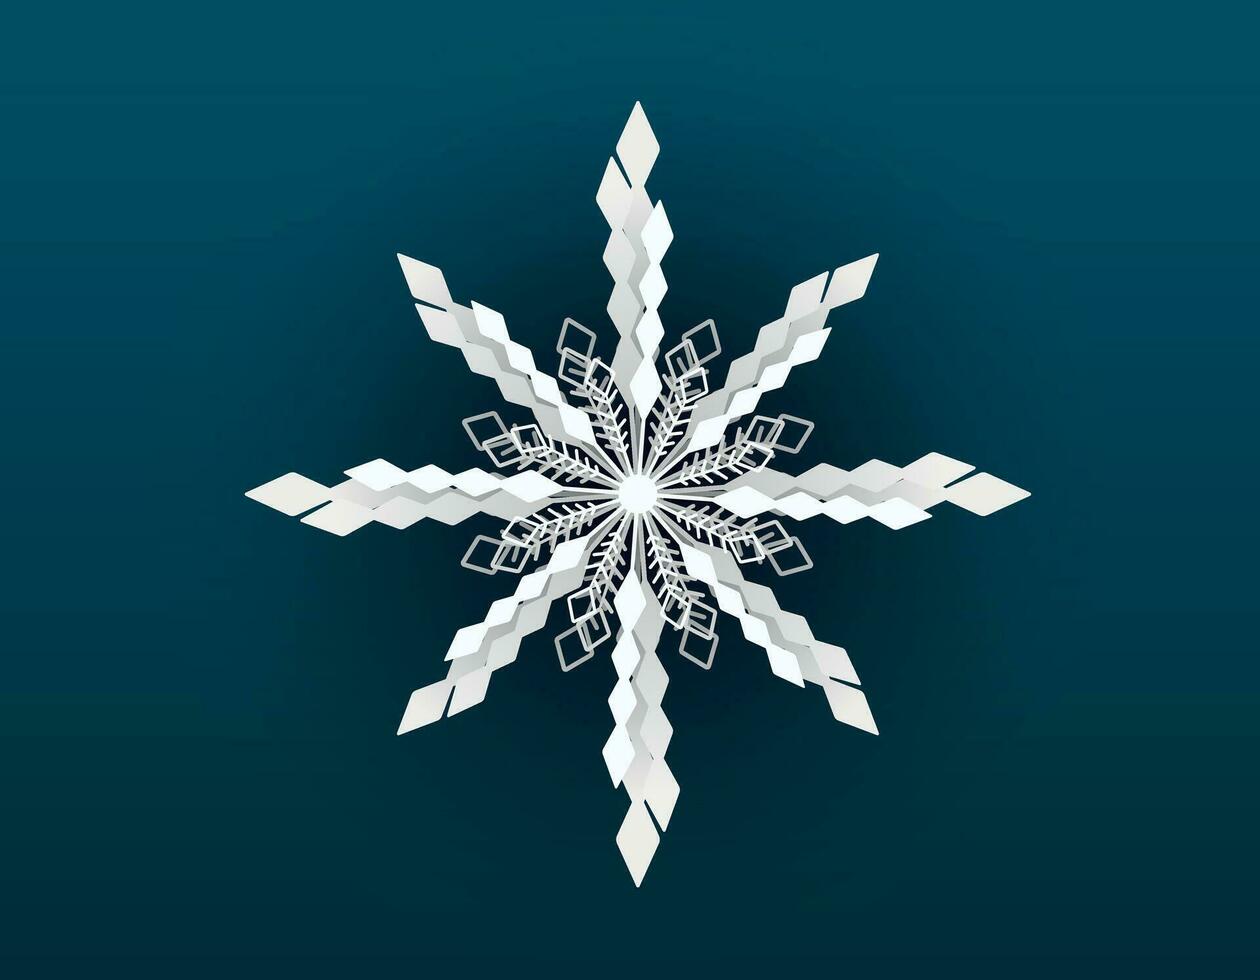 Vector isolated cartoon winter shining filigree snowflake.